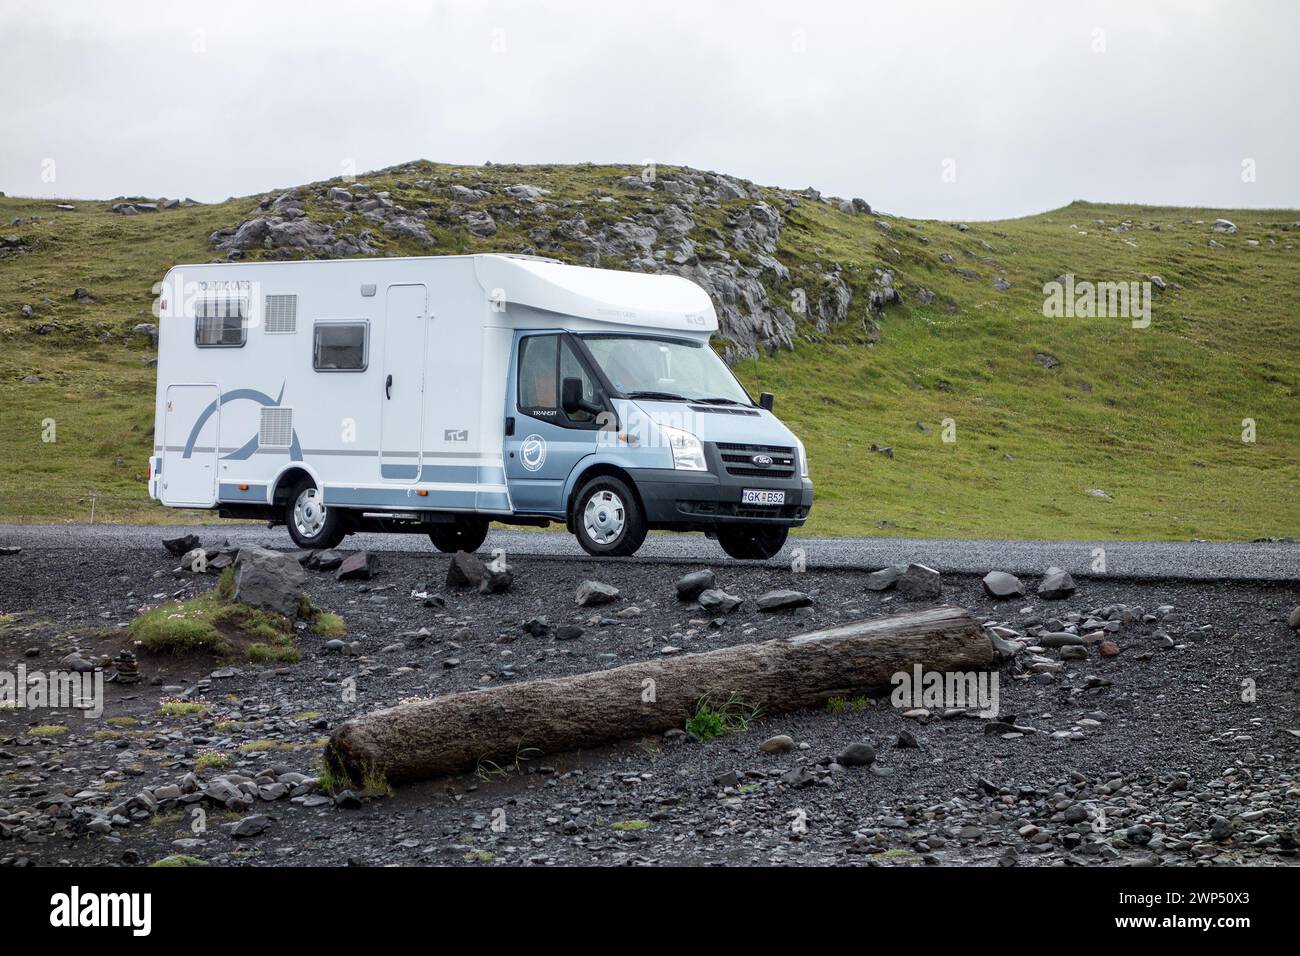 VIK, ISLAND - 30. JUNI 2014: Blau-weißer Ford Transit Caravan Car in Island nahe der Stadt Vik Stockfoto